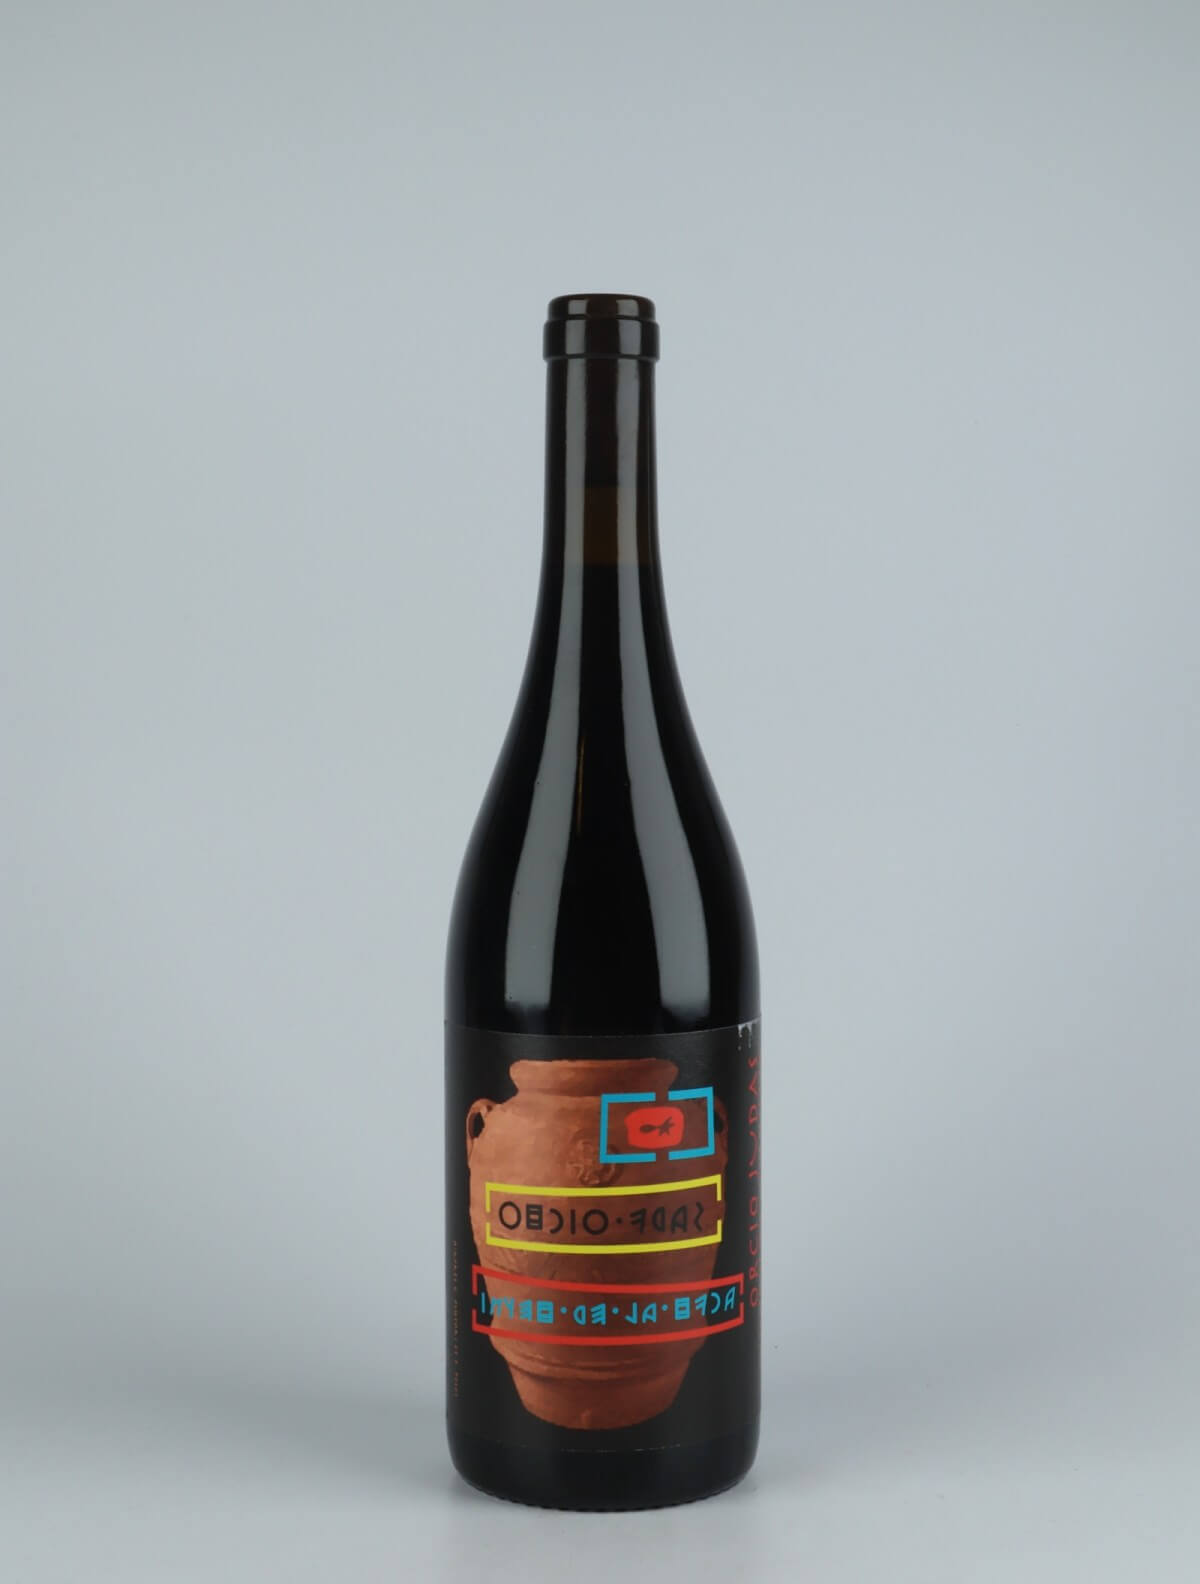 A bottle 2020 Orcio Judas Red wine from Vinyer de la Ruca, Rousillon in France